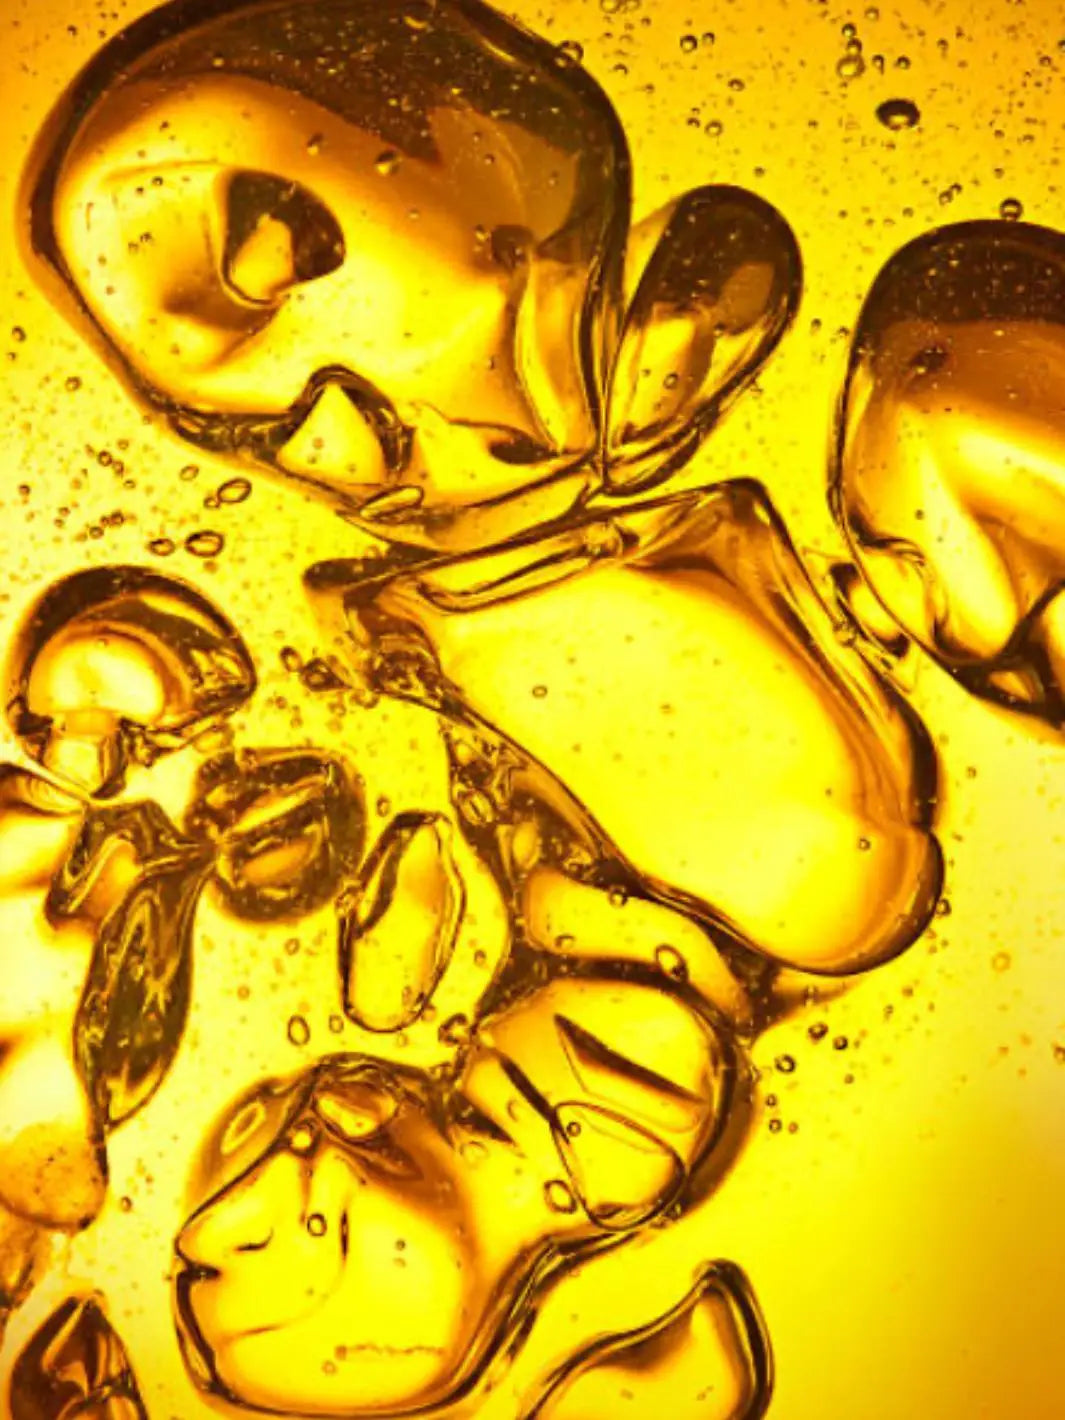 Notre huile protectrice MIDI12 est naturelle, et ne contient aucunes nanoparticules.